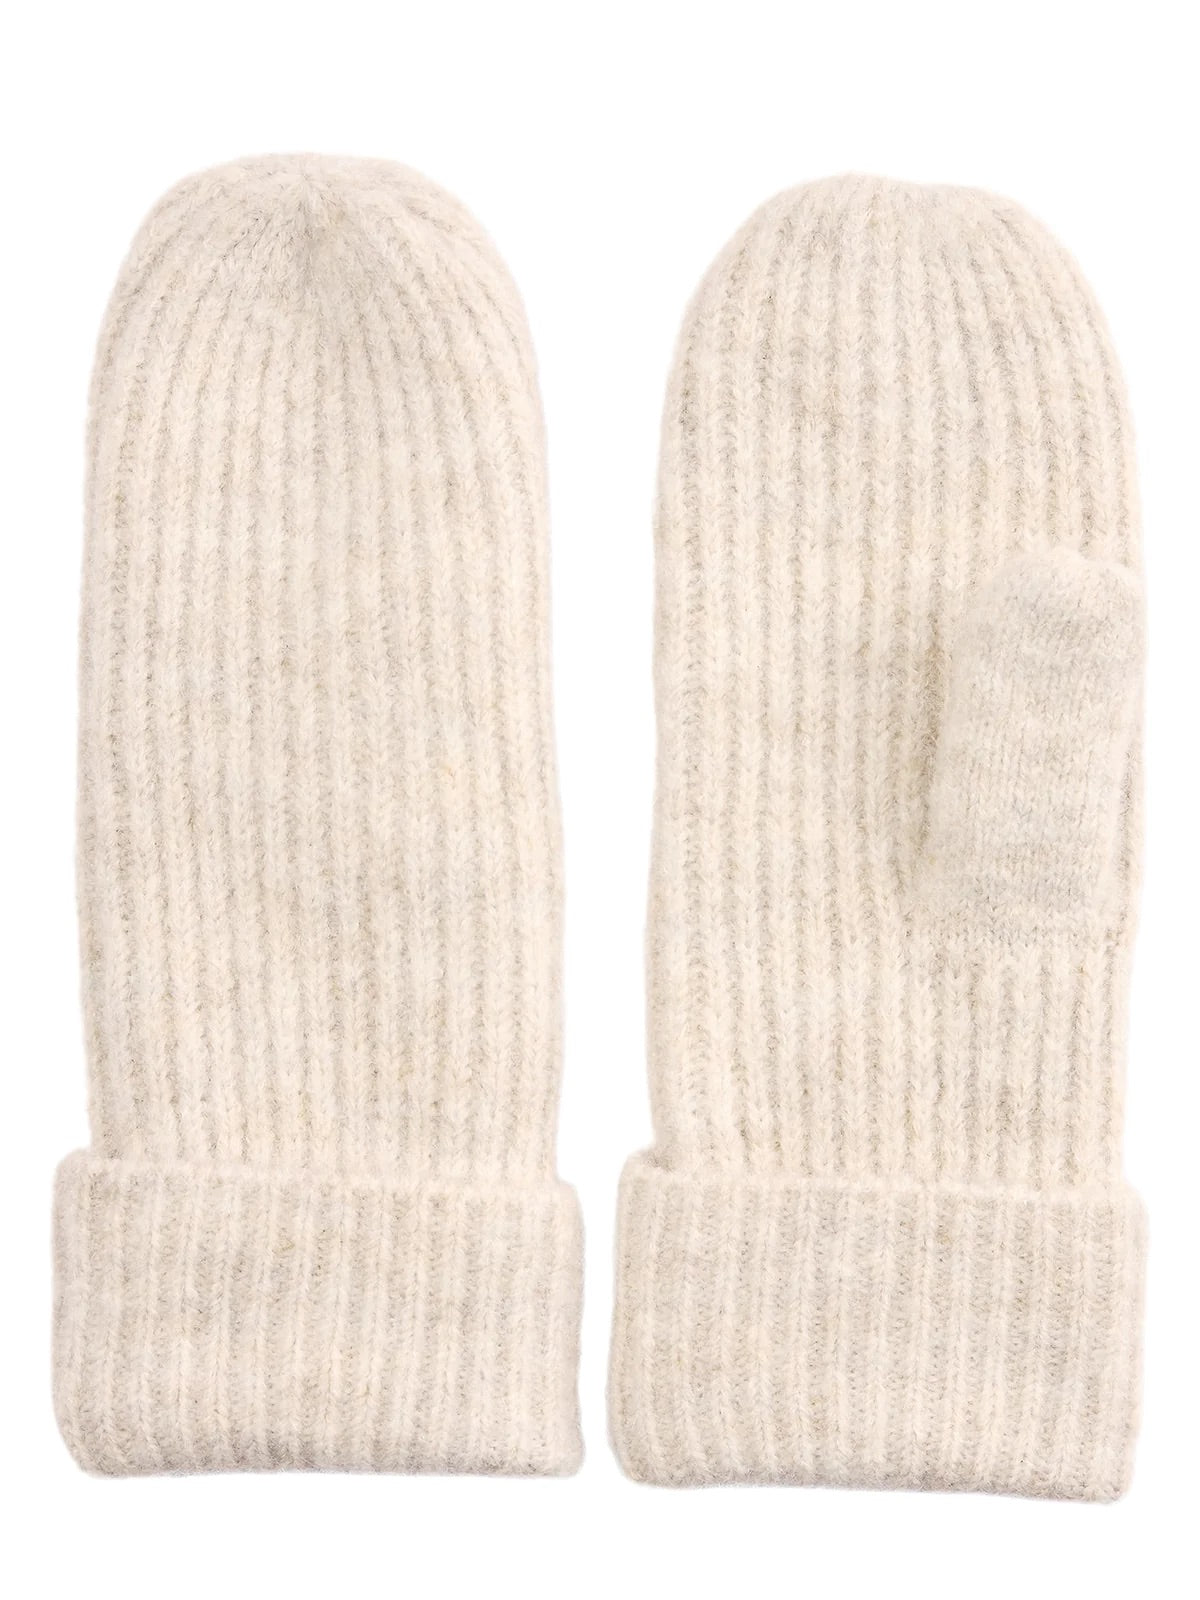 Numph Nusafir Mitten Gloves in Oyster Gray